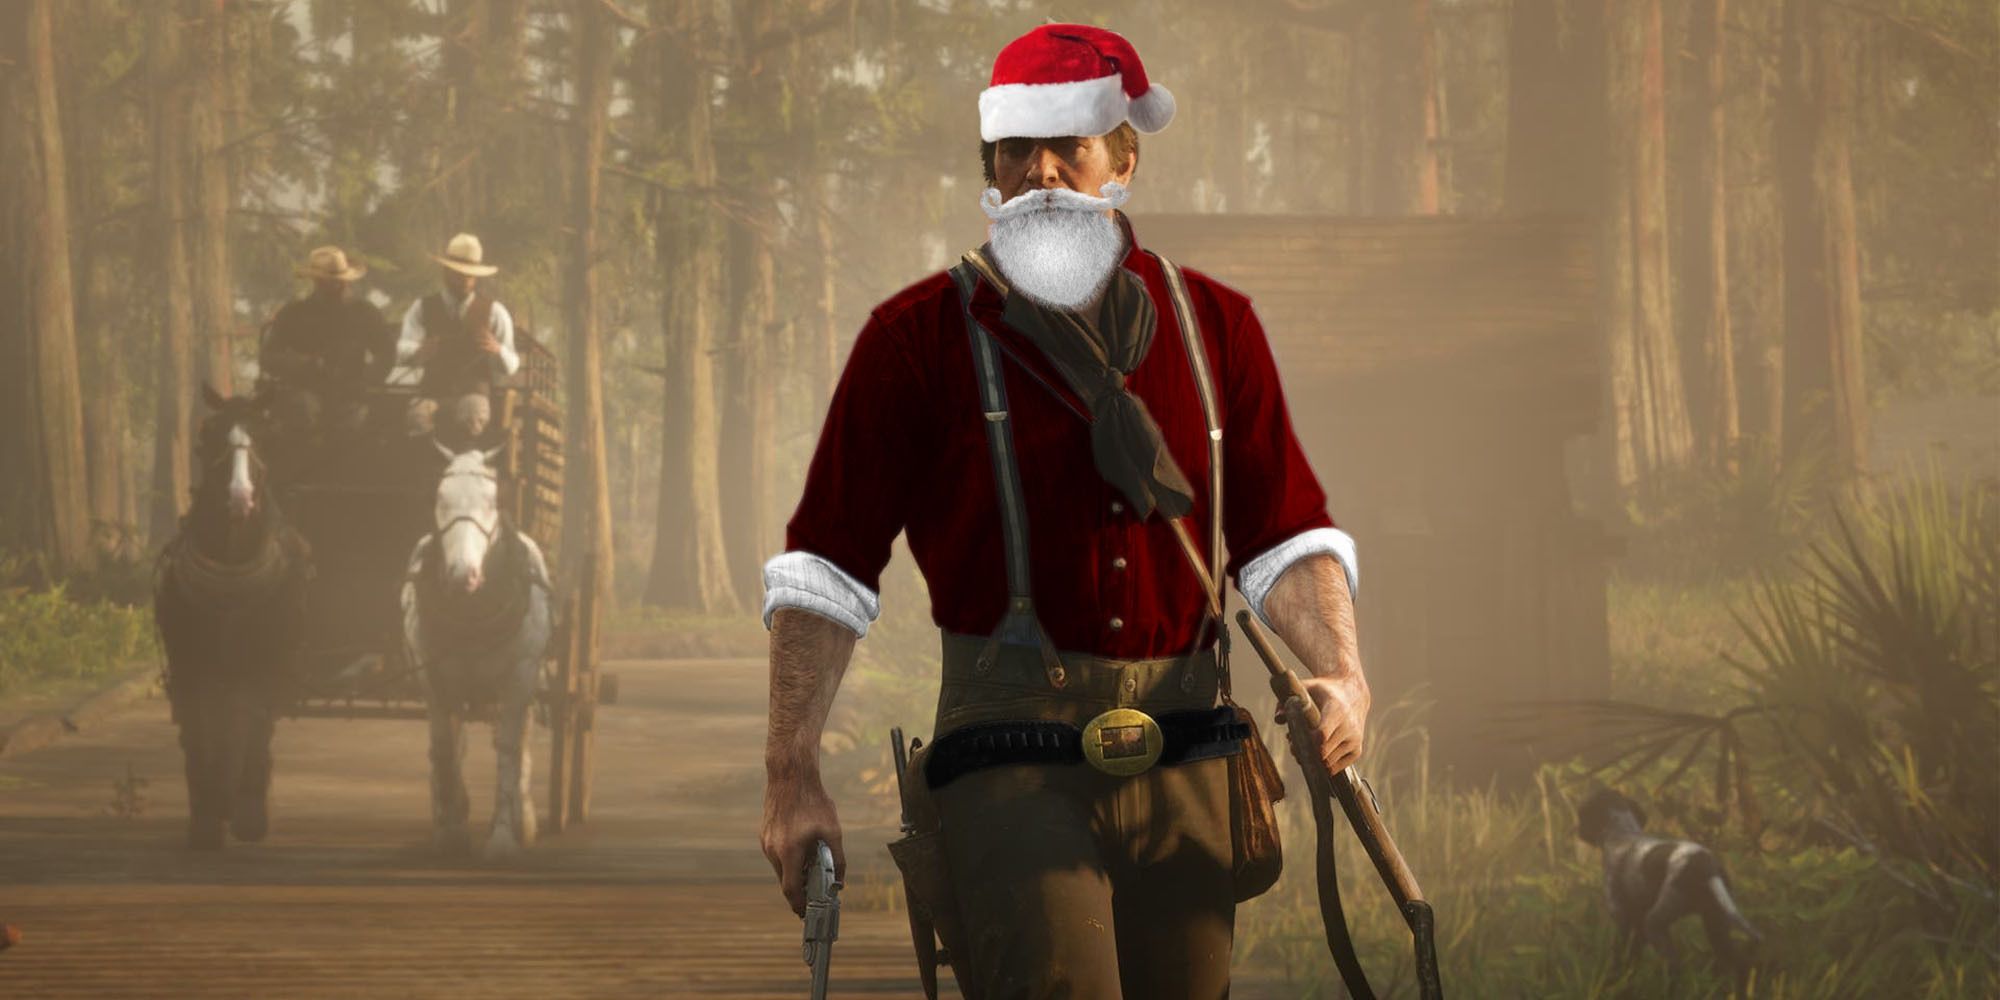 Arthur Morgan dressed as Santa